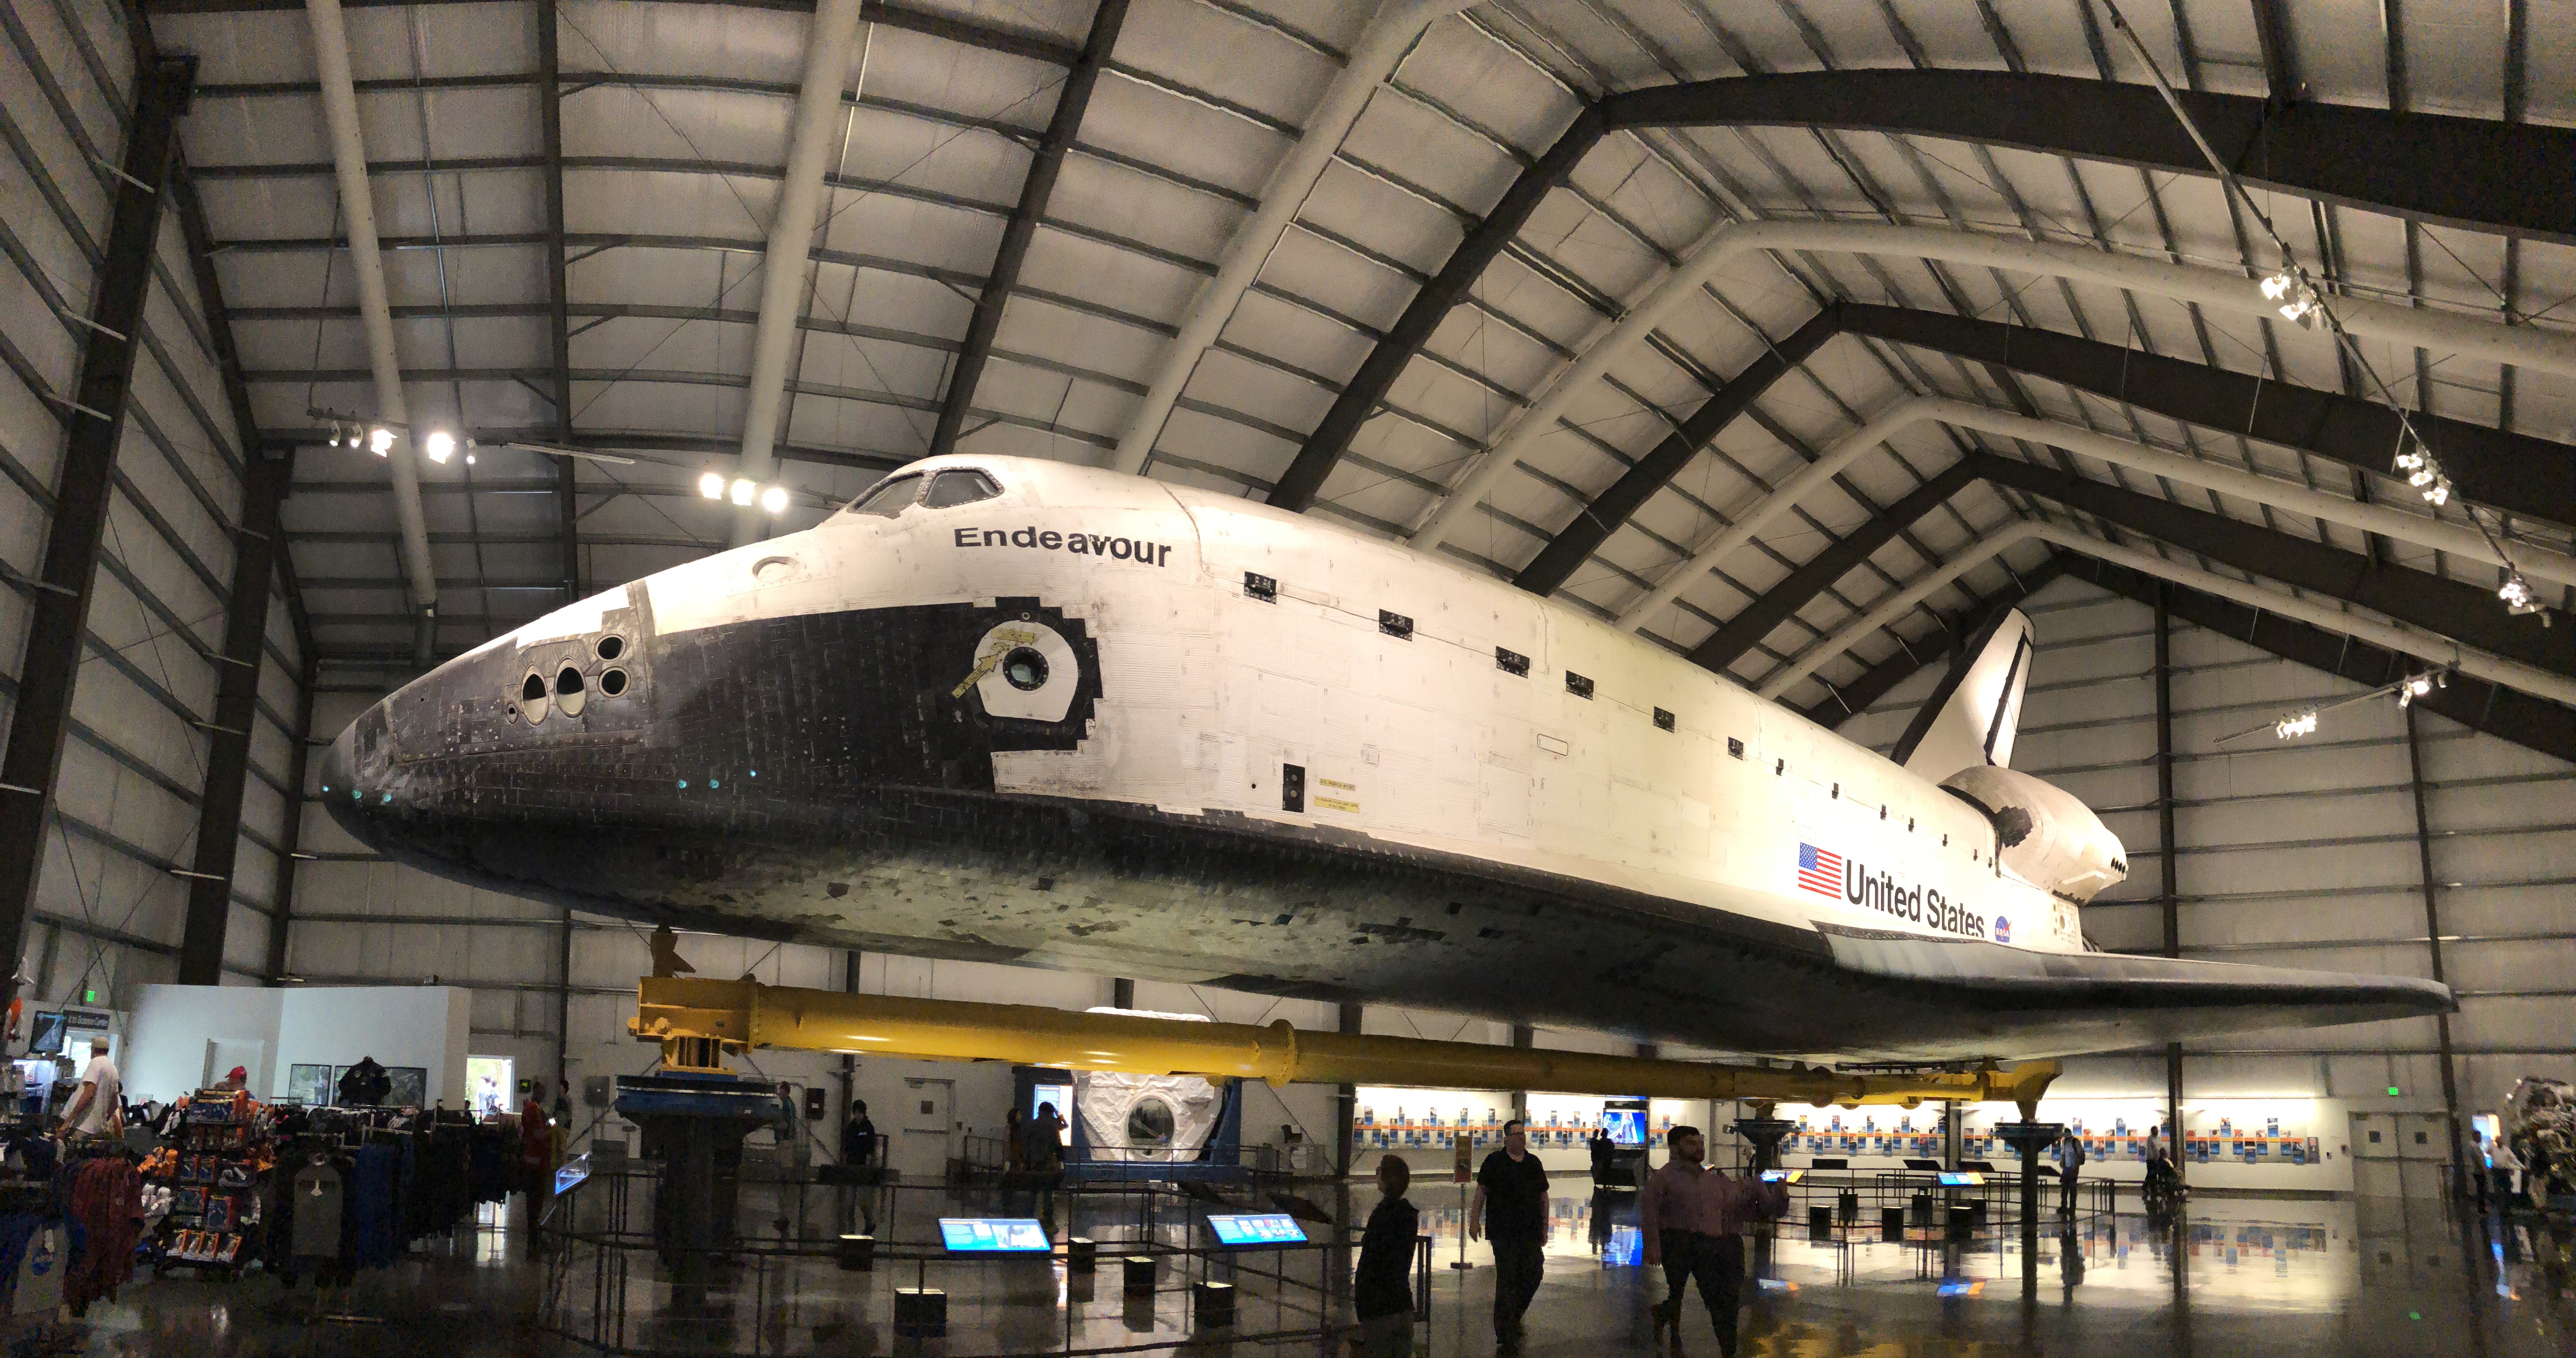 The Space Shuttle Endeavor!